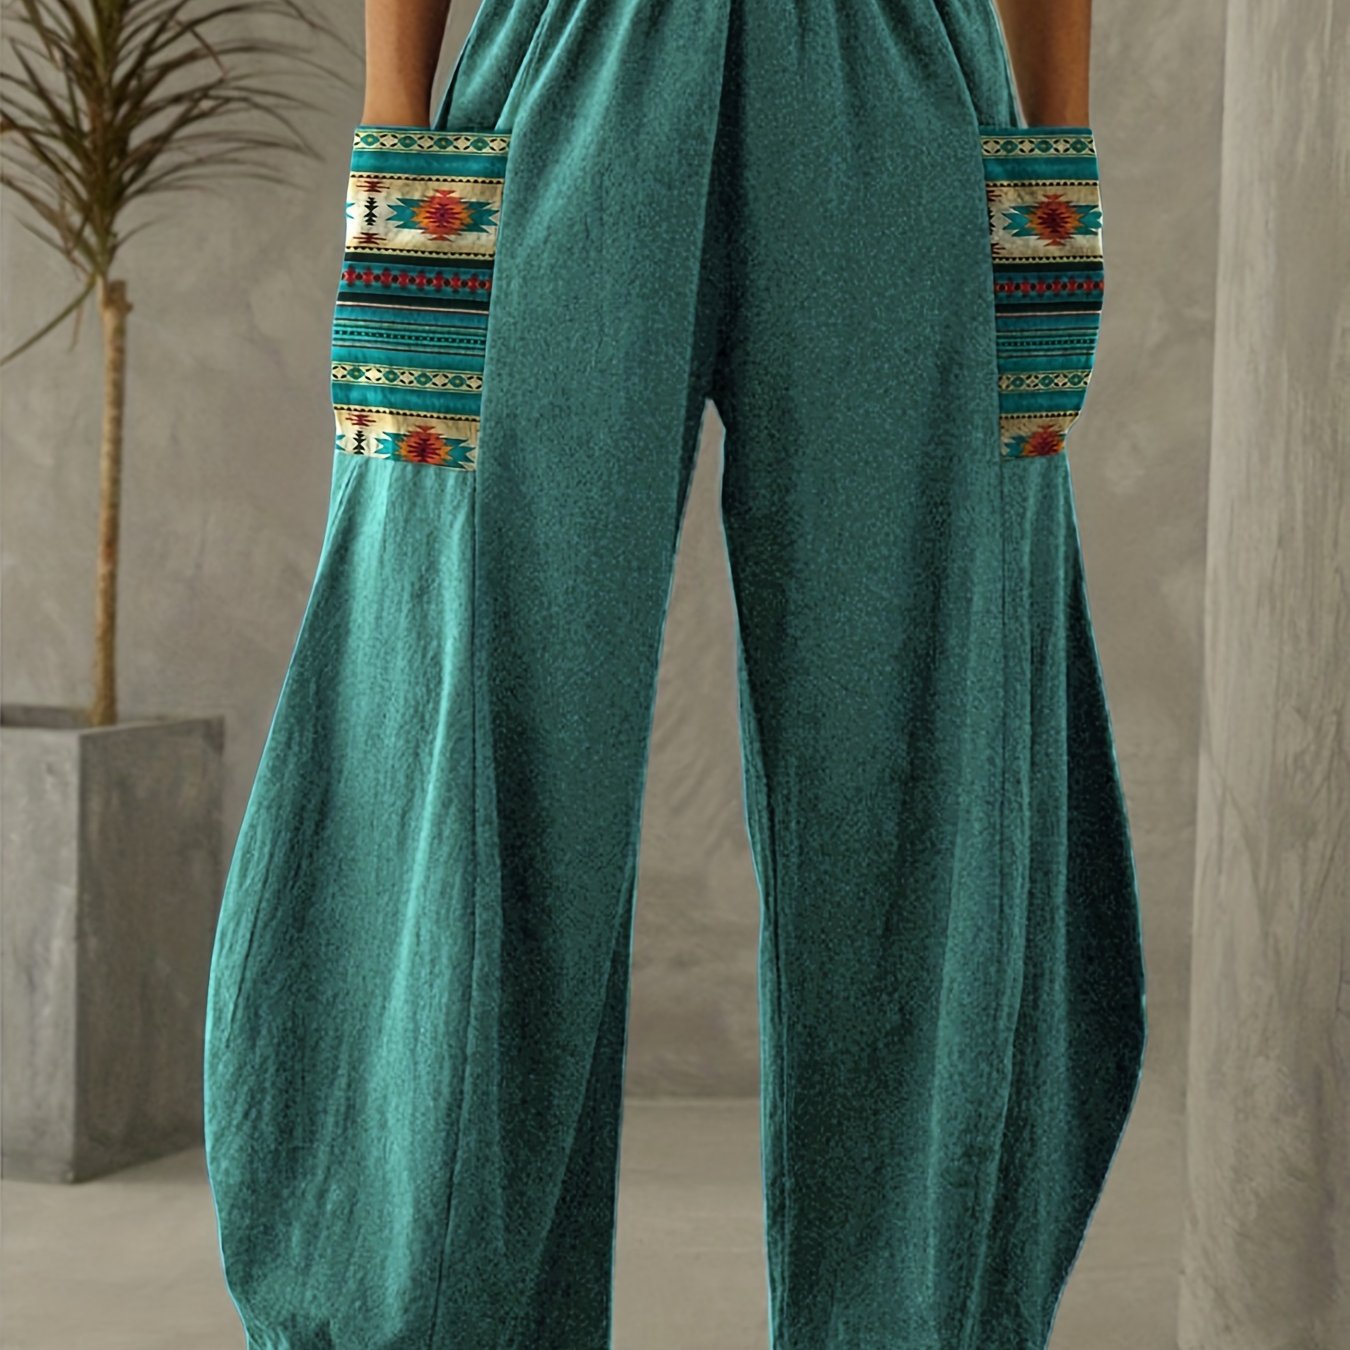 Boho Aztec Print High Waist Pants, Vintage Elastic Wide Leg Pants, Women's Clothing